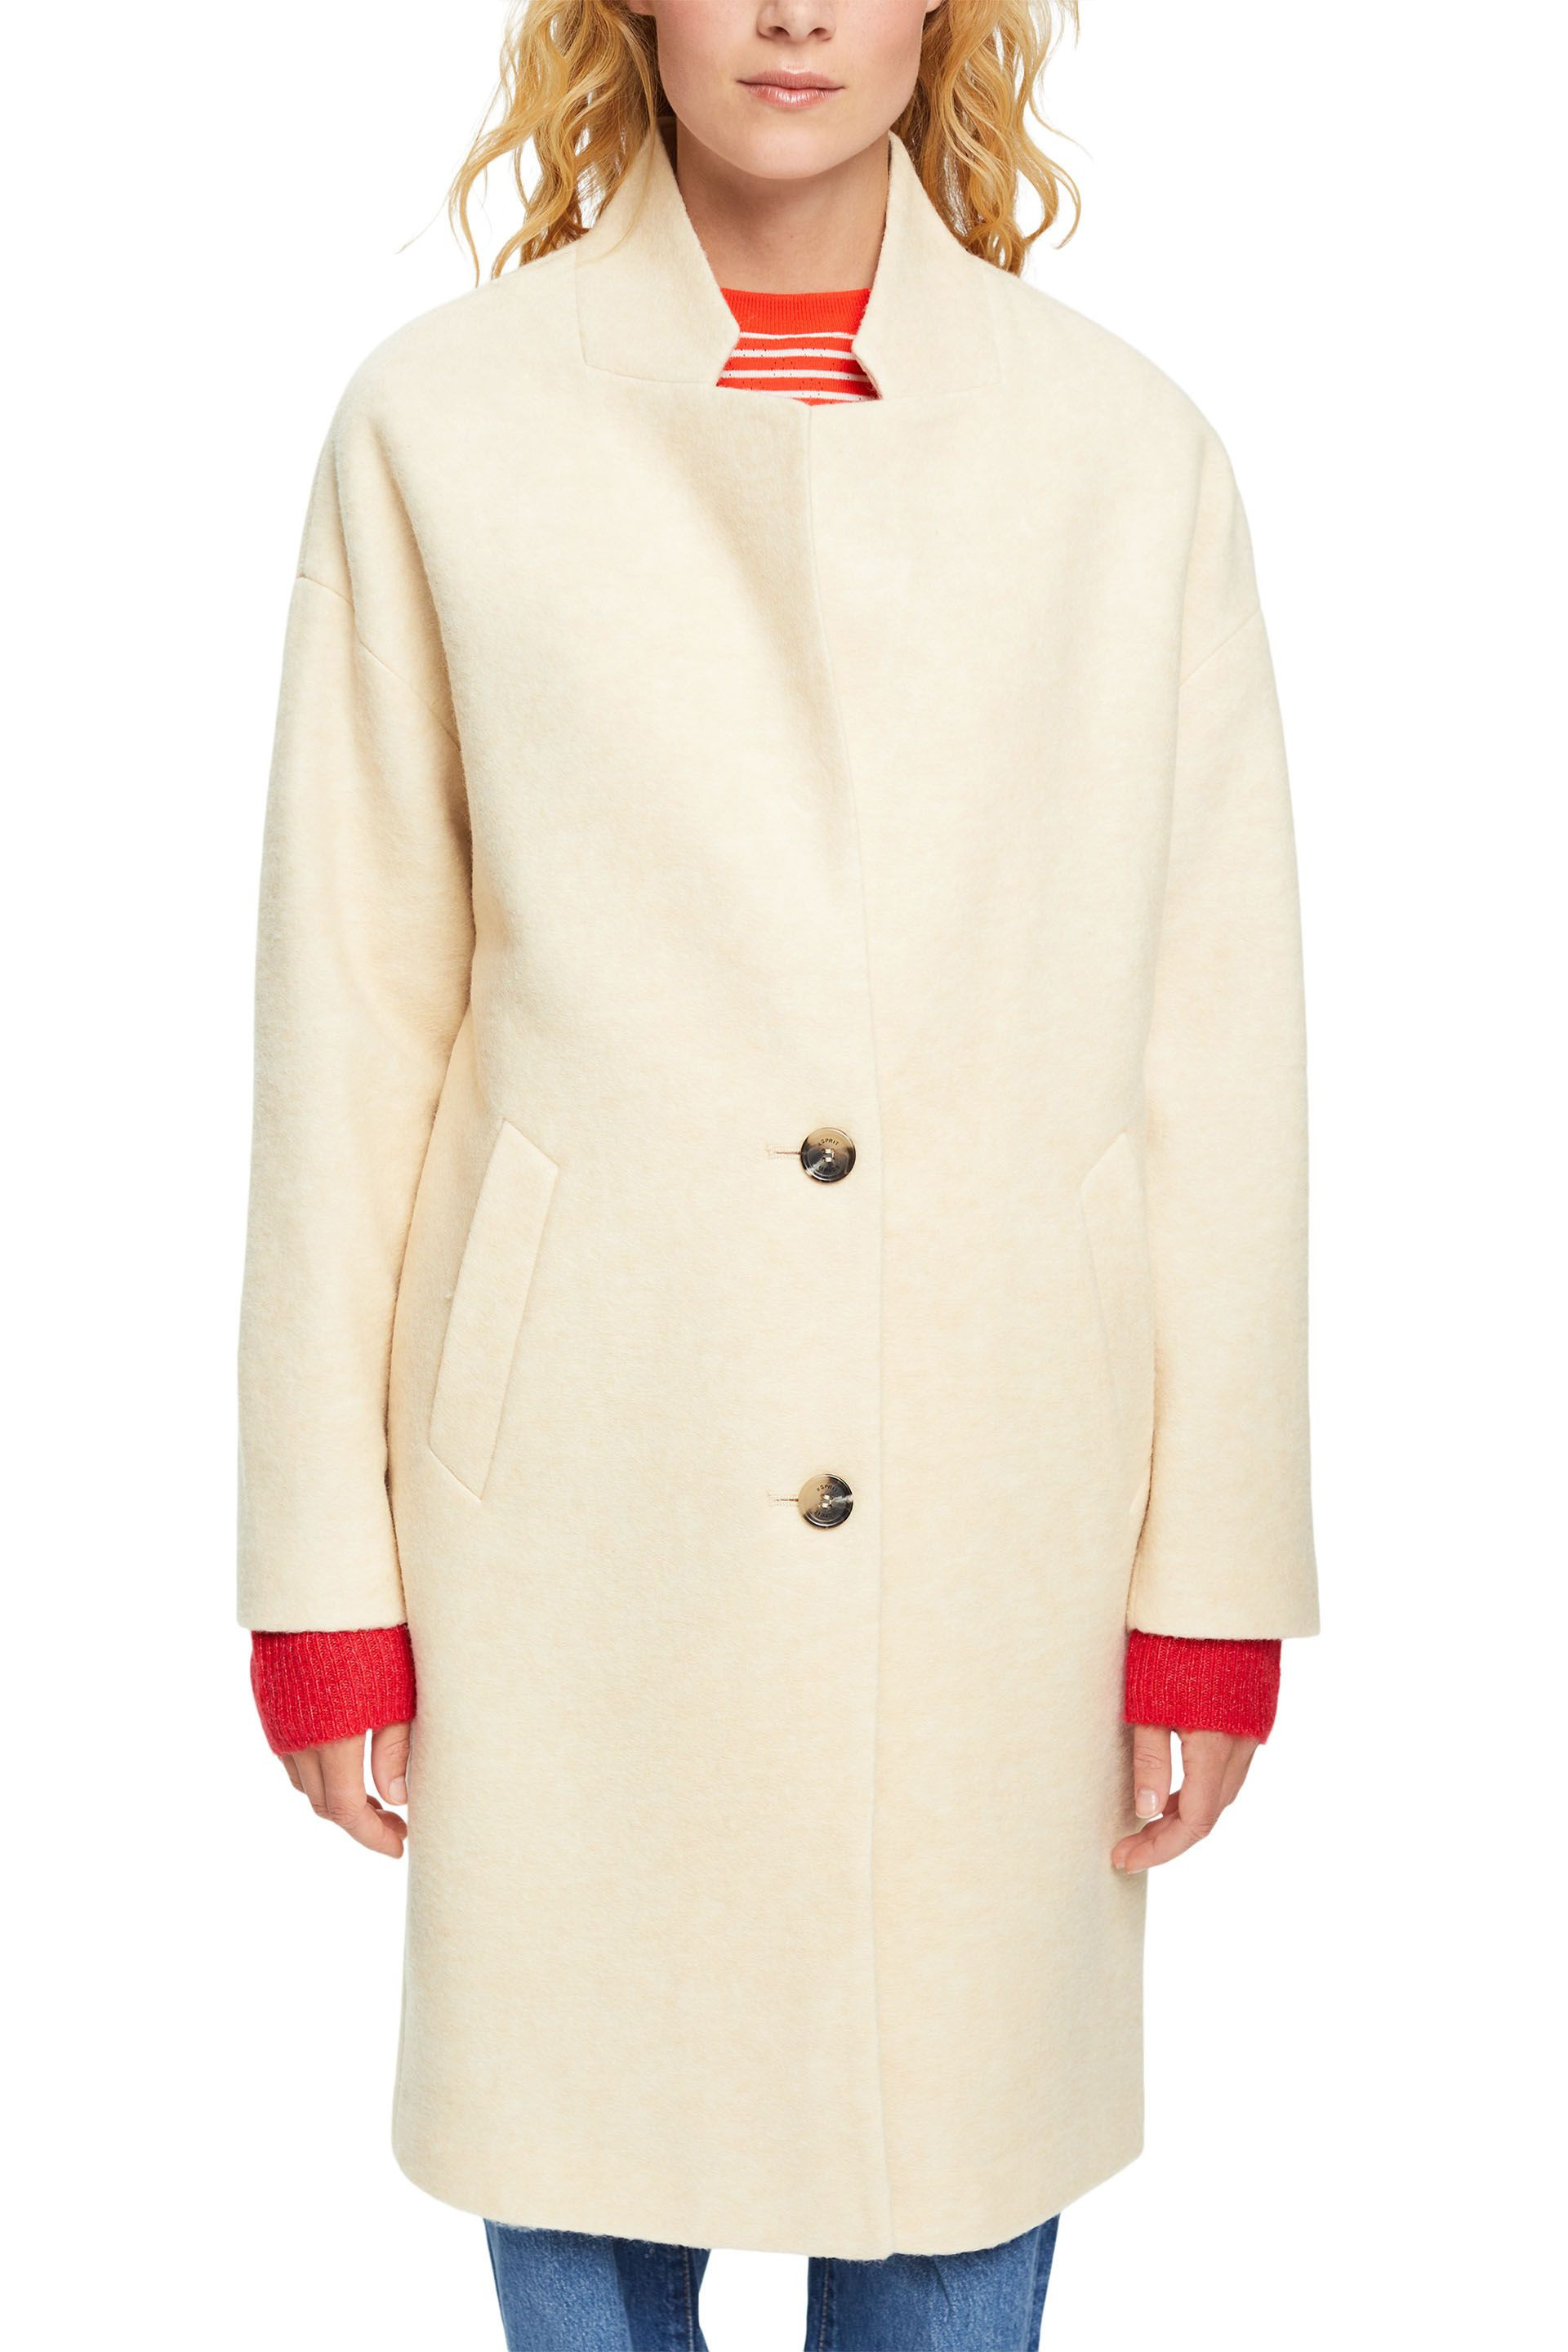 Cappotto in misto lana con collo revers, Beige, large image number 2